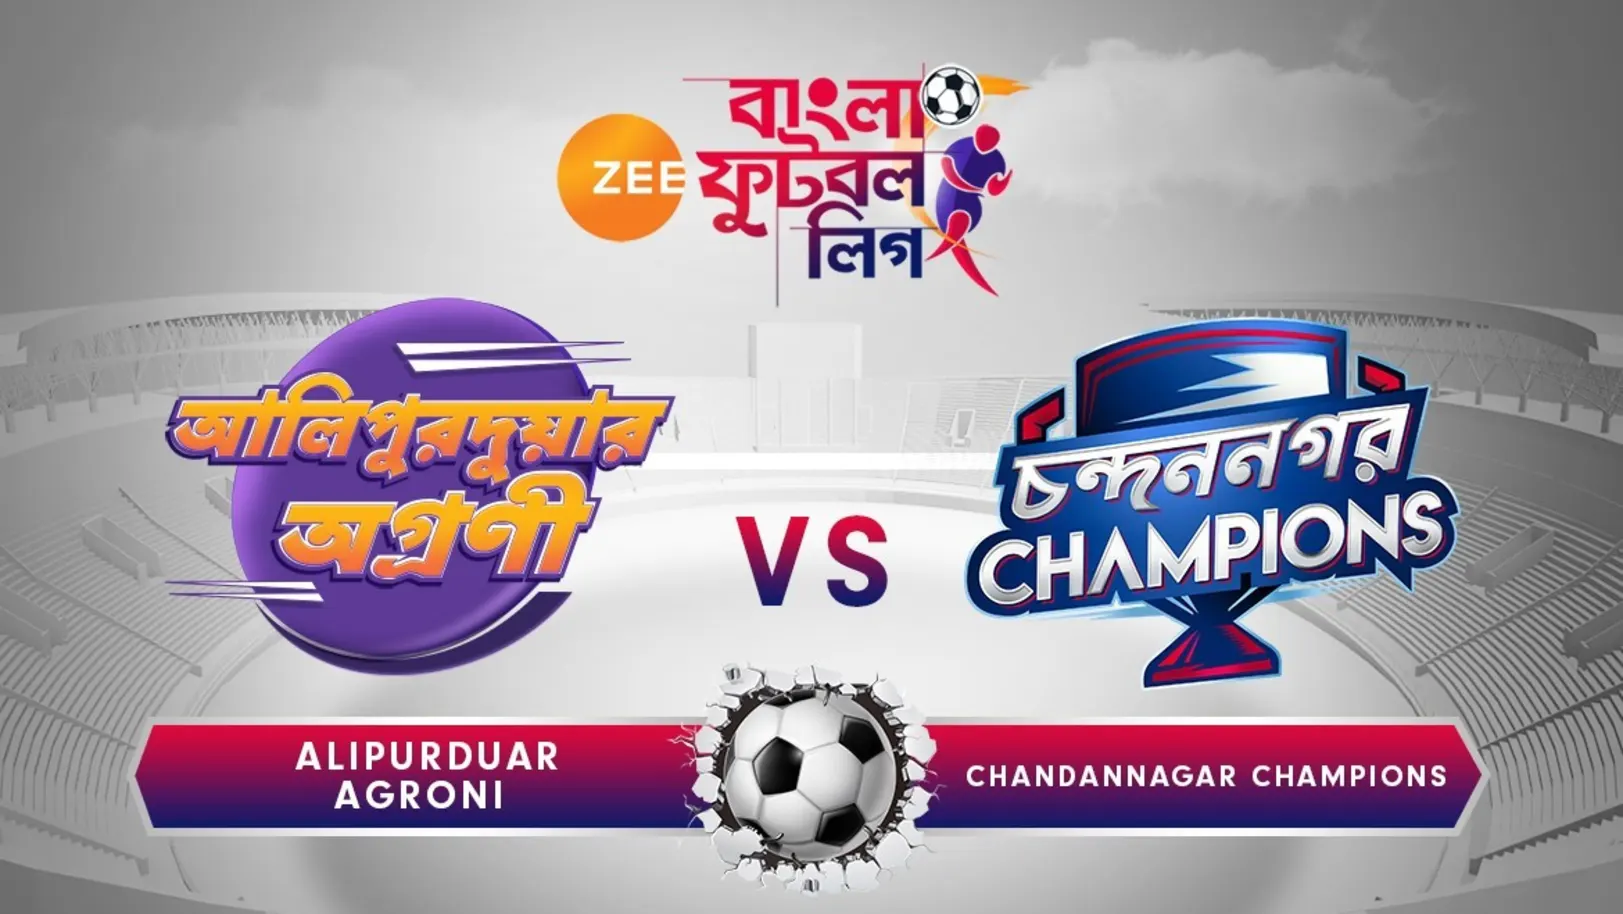 Alipurduar Agroni vs Chandannagar Champions - June 11 - ZBFL 2019 Episode 28